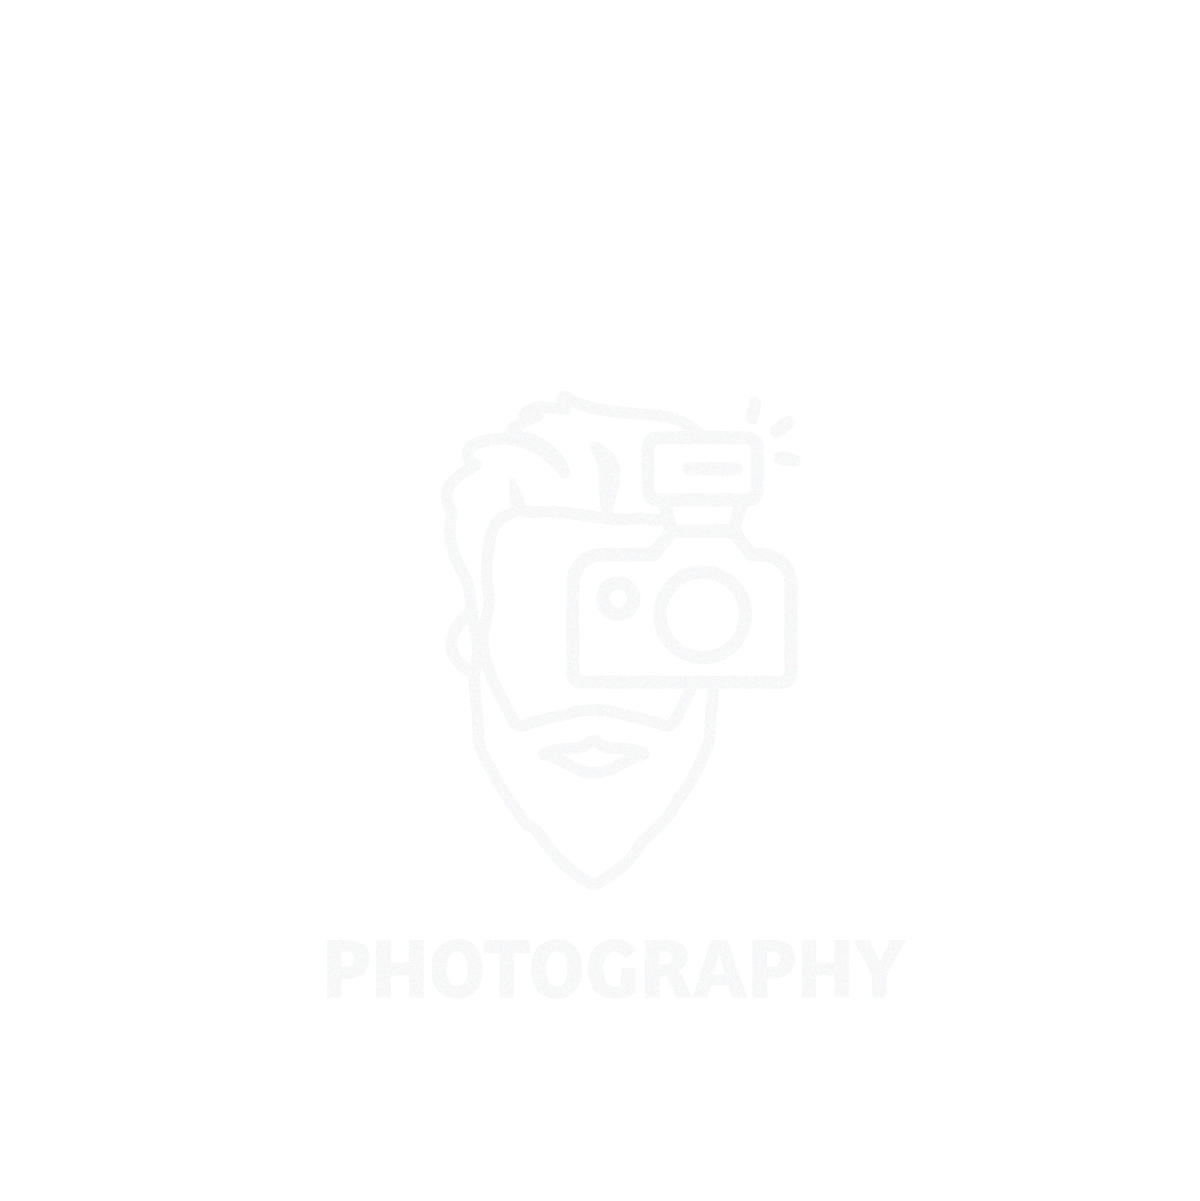 Big Beard Photography